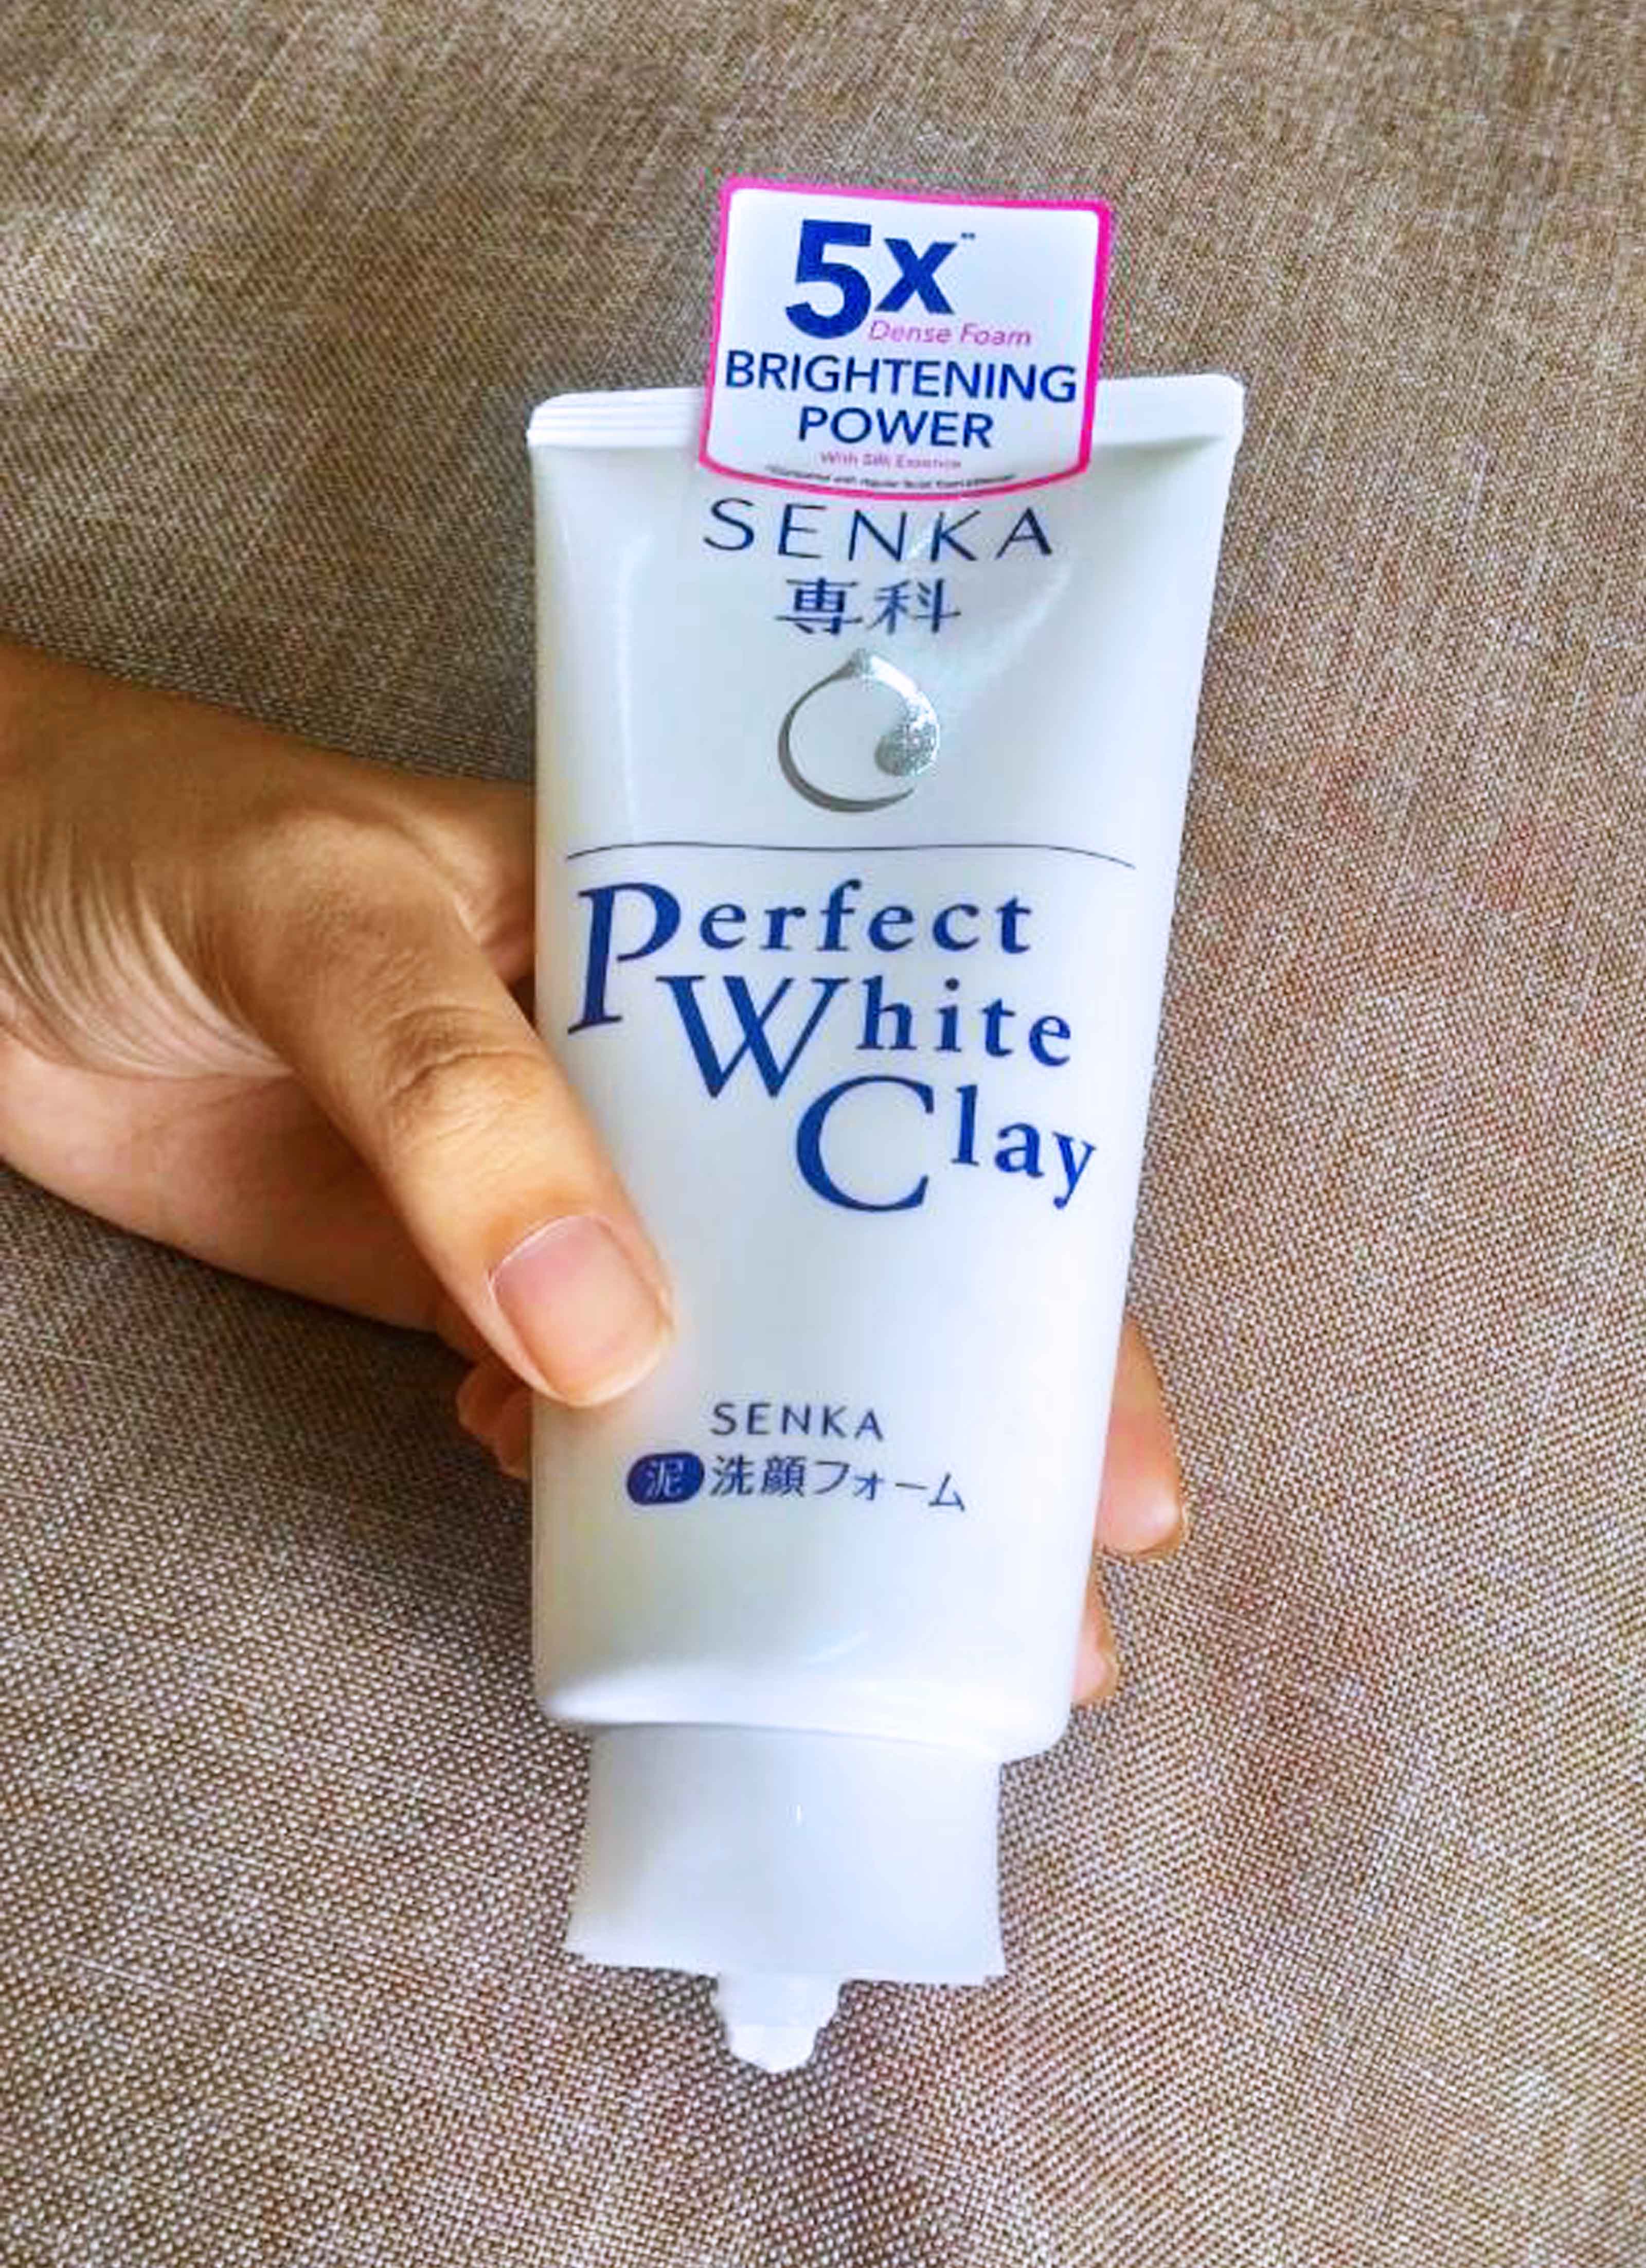 Senka Perfect White Clay Cleanser